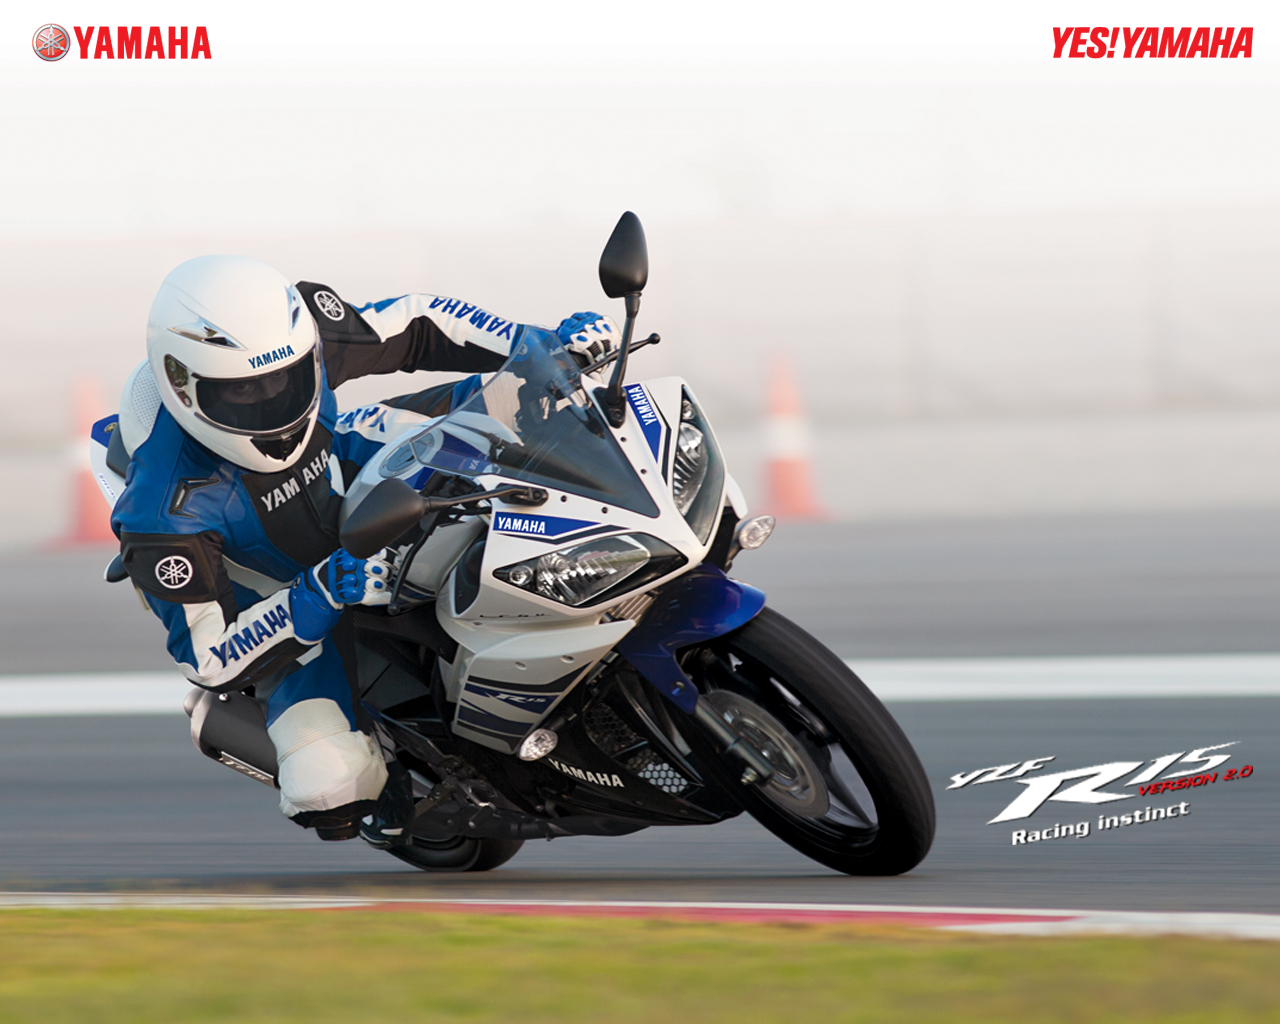 yamaha r15 version 2.0 wallpapers,land vehicle,vehicle,motorcycle,motorcycle racer,superbike racing